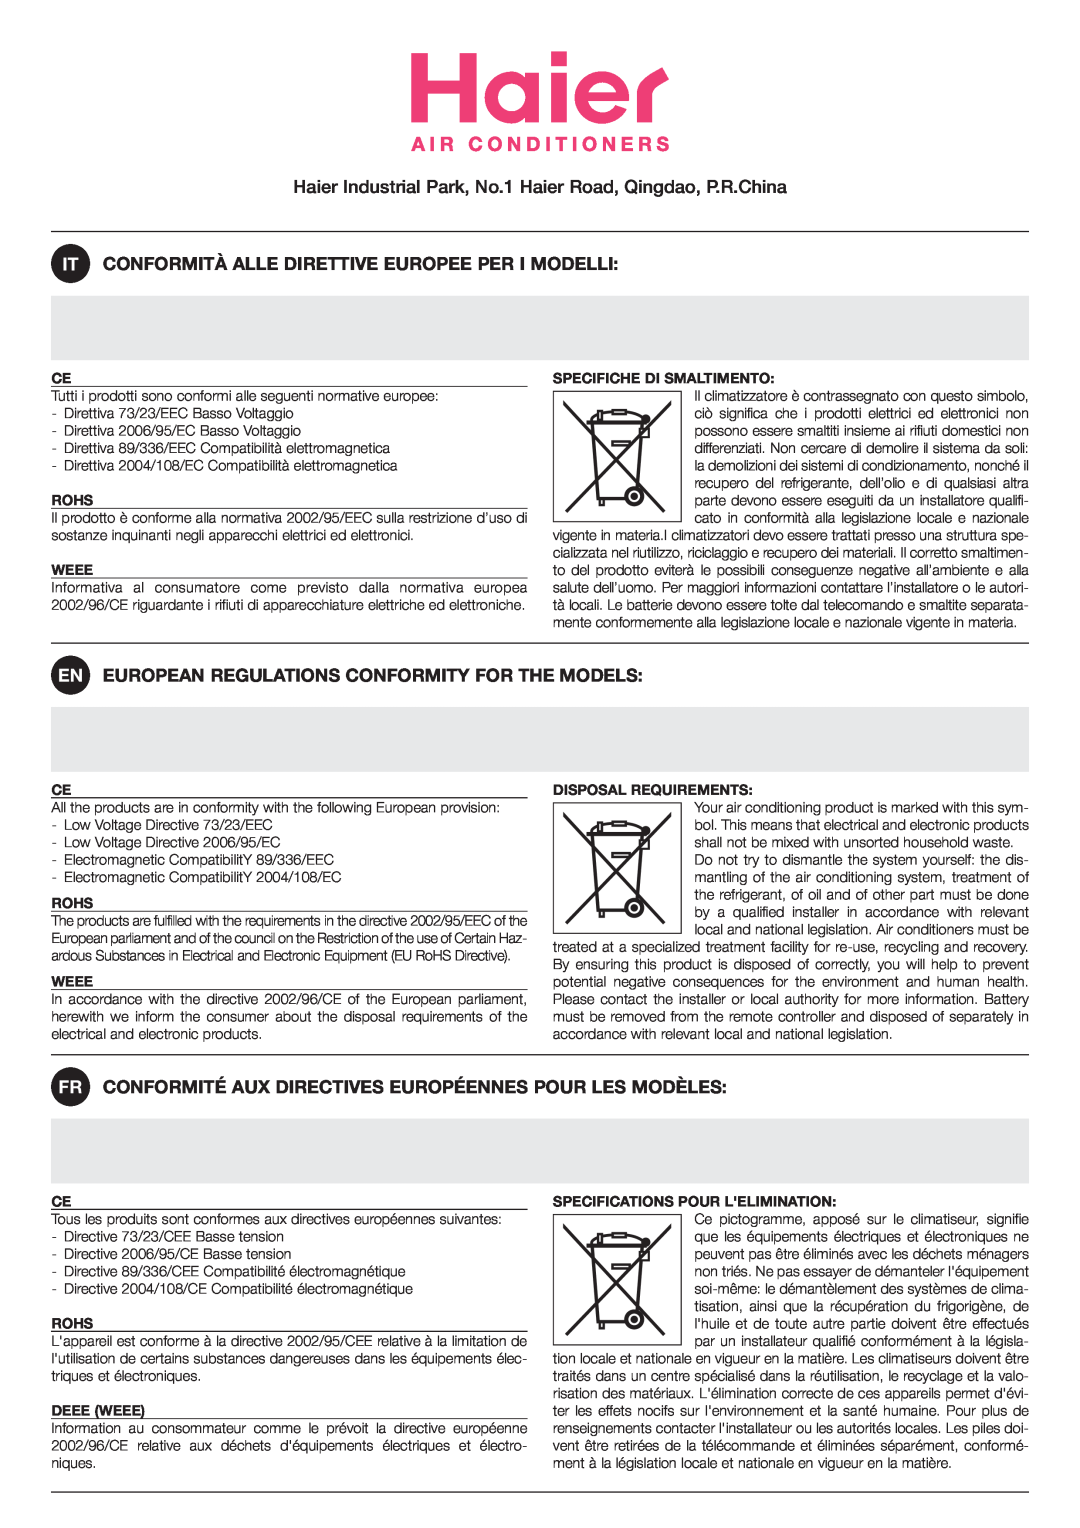 Haier HSU-09RF03/R2, HSU-12RF03/R2 operation manual En European Regulations Conformity For The Models 